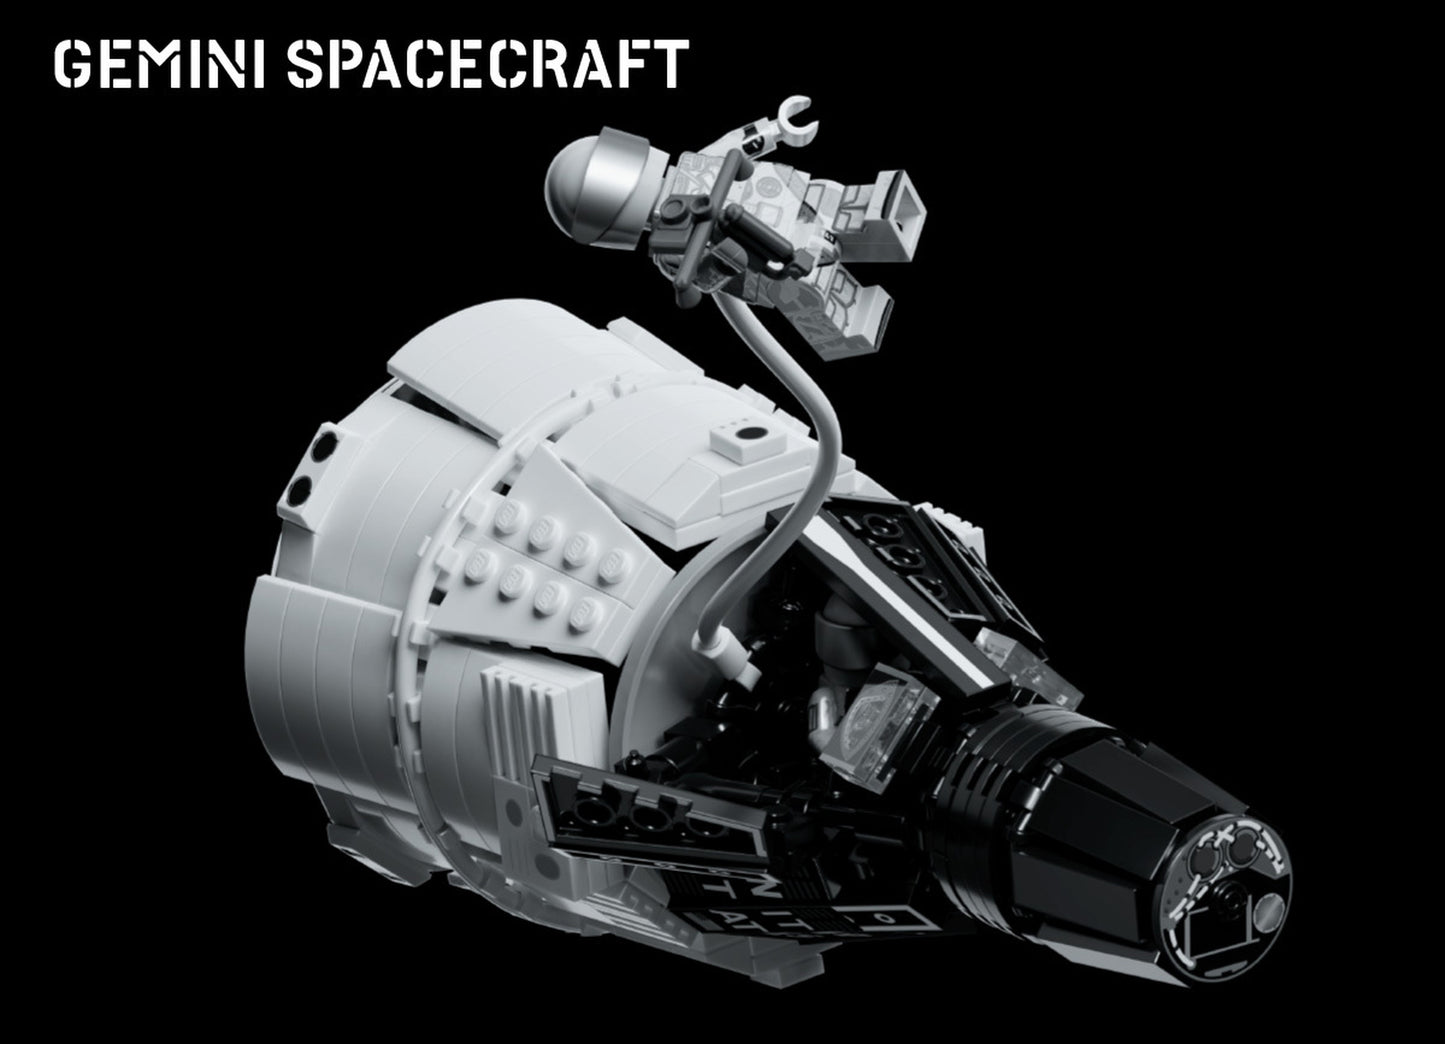 Gemini Spacecraft - Crewed Orbital Vehicle